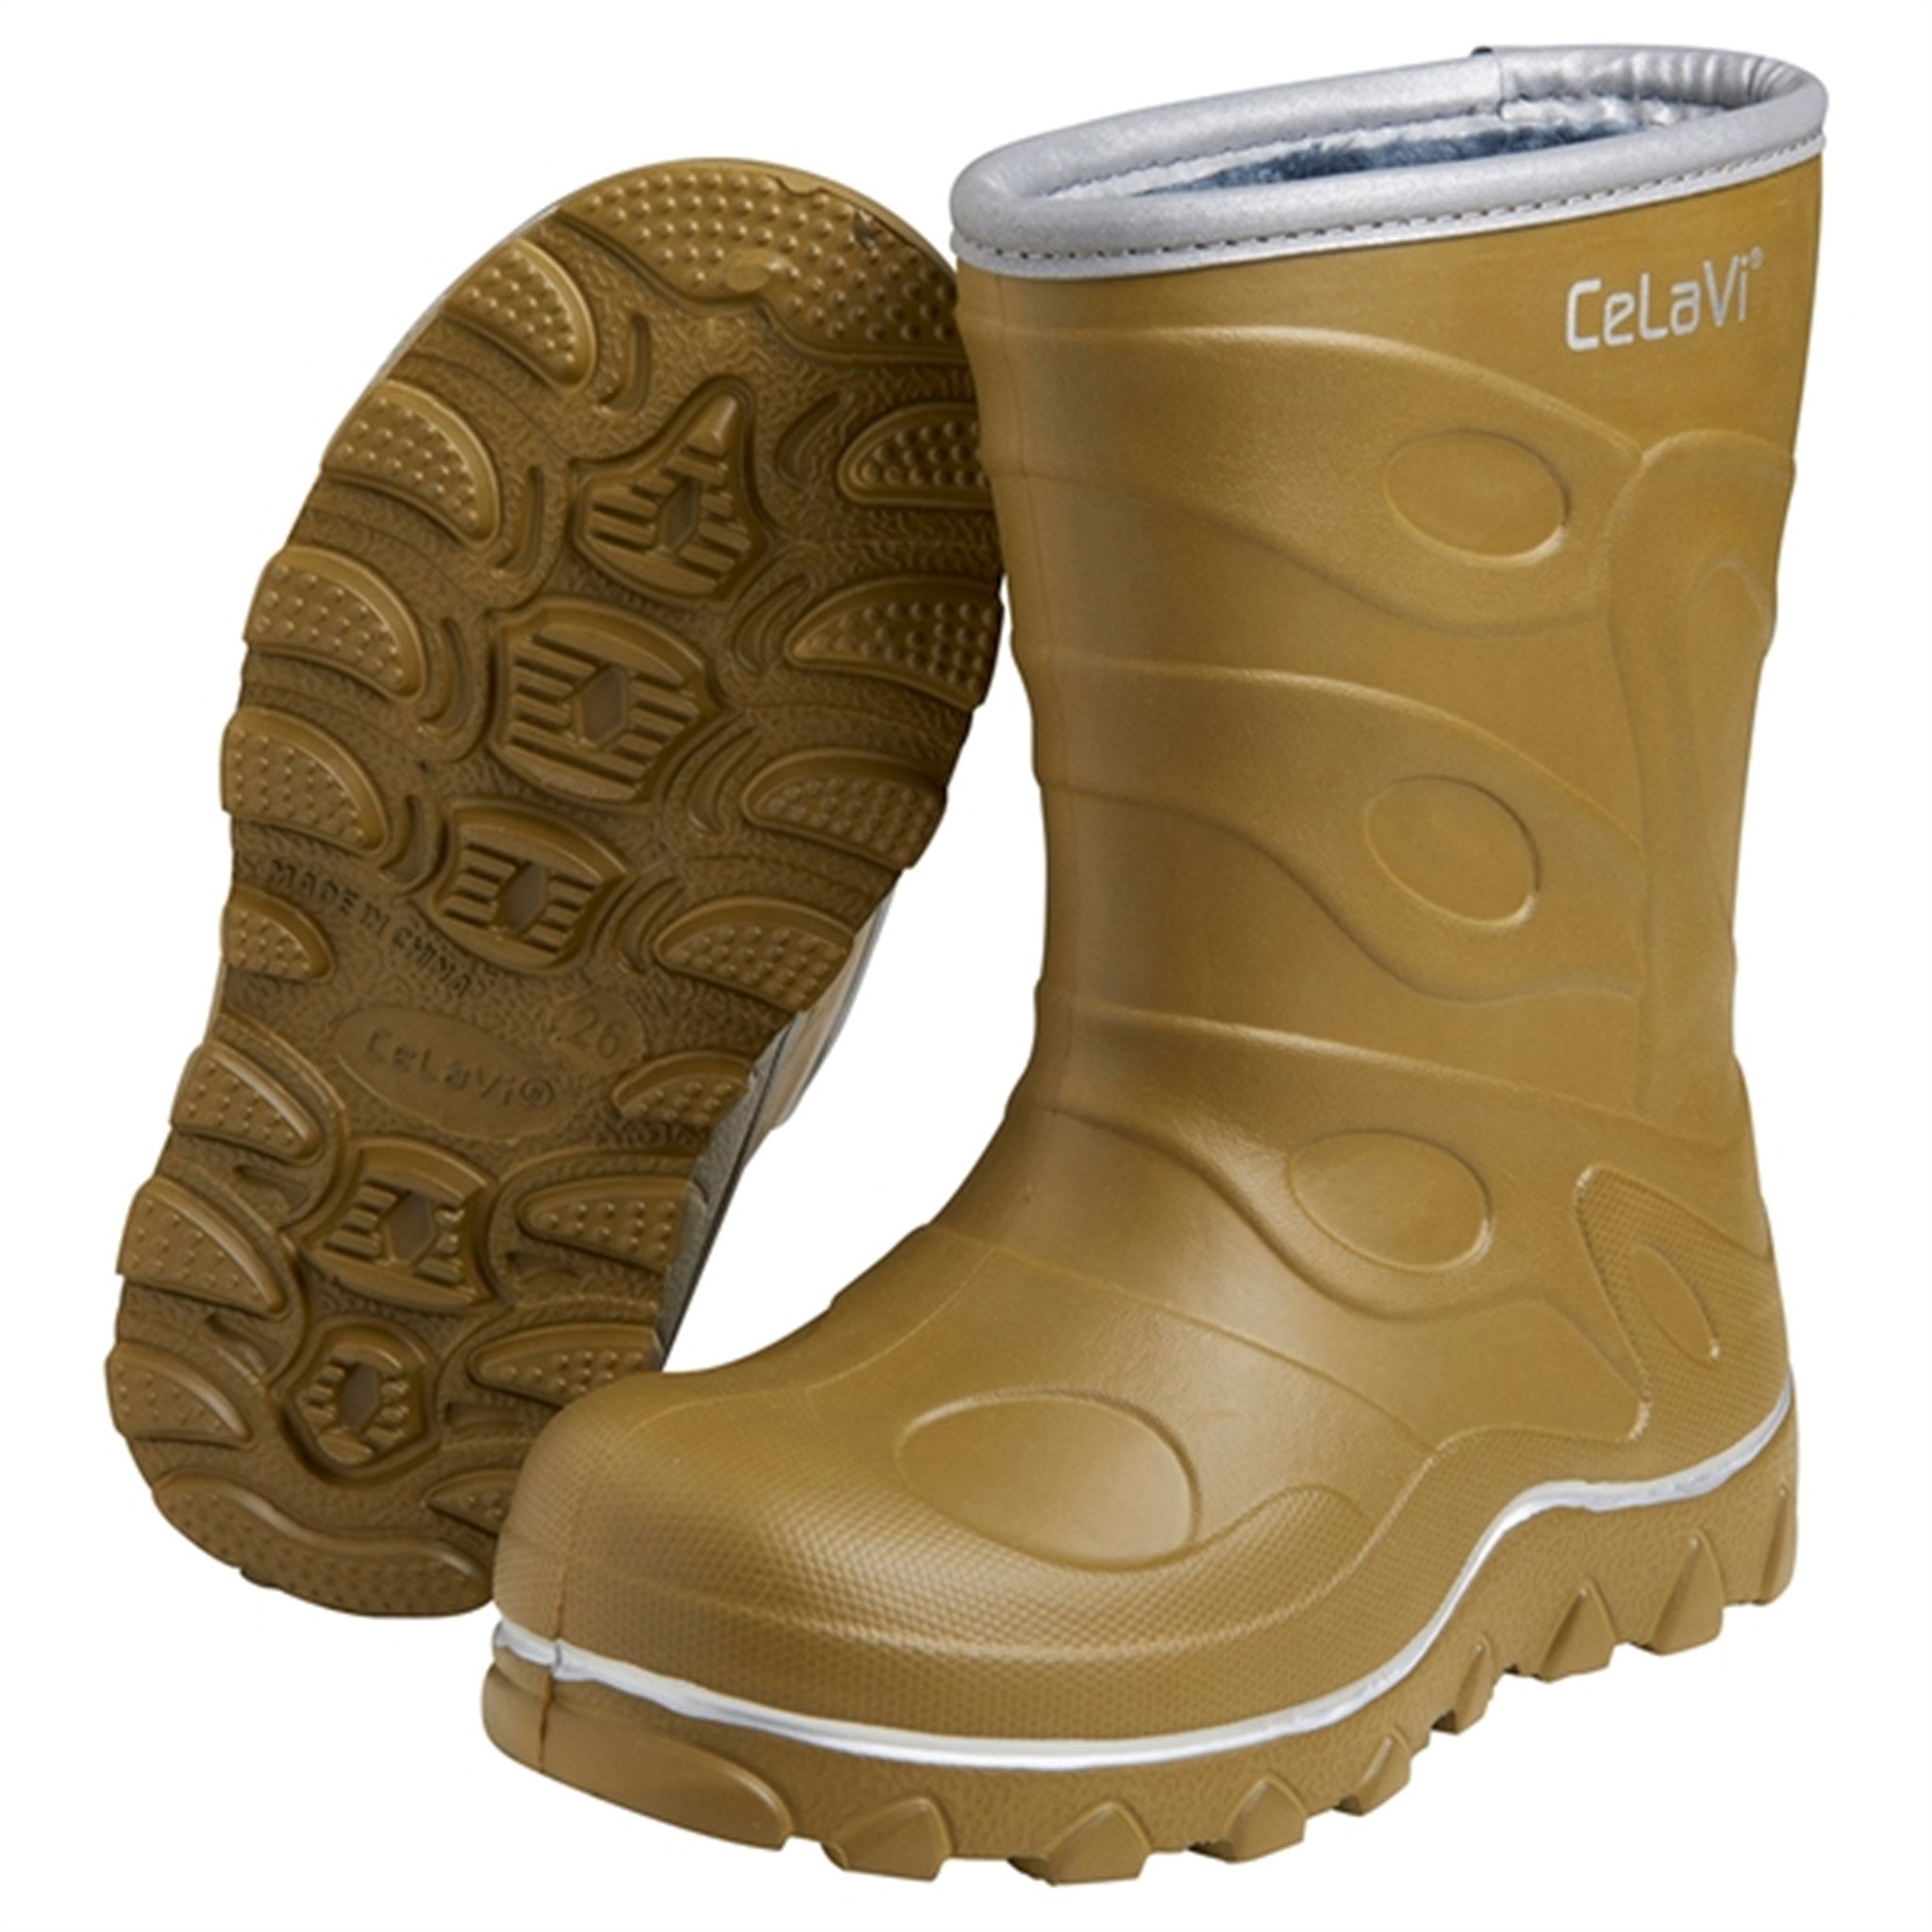 Celavi Thermo Boots Nutria 2